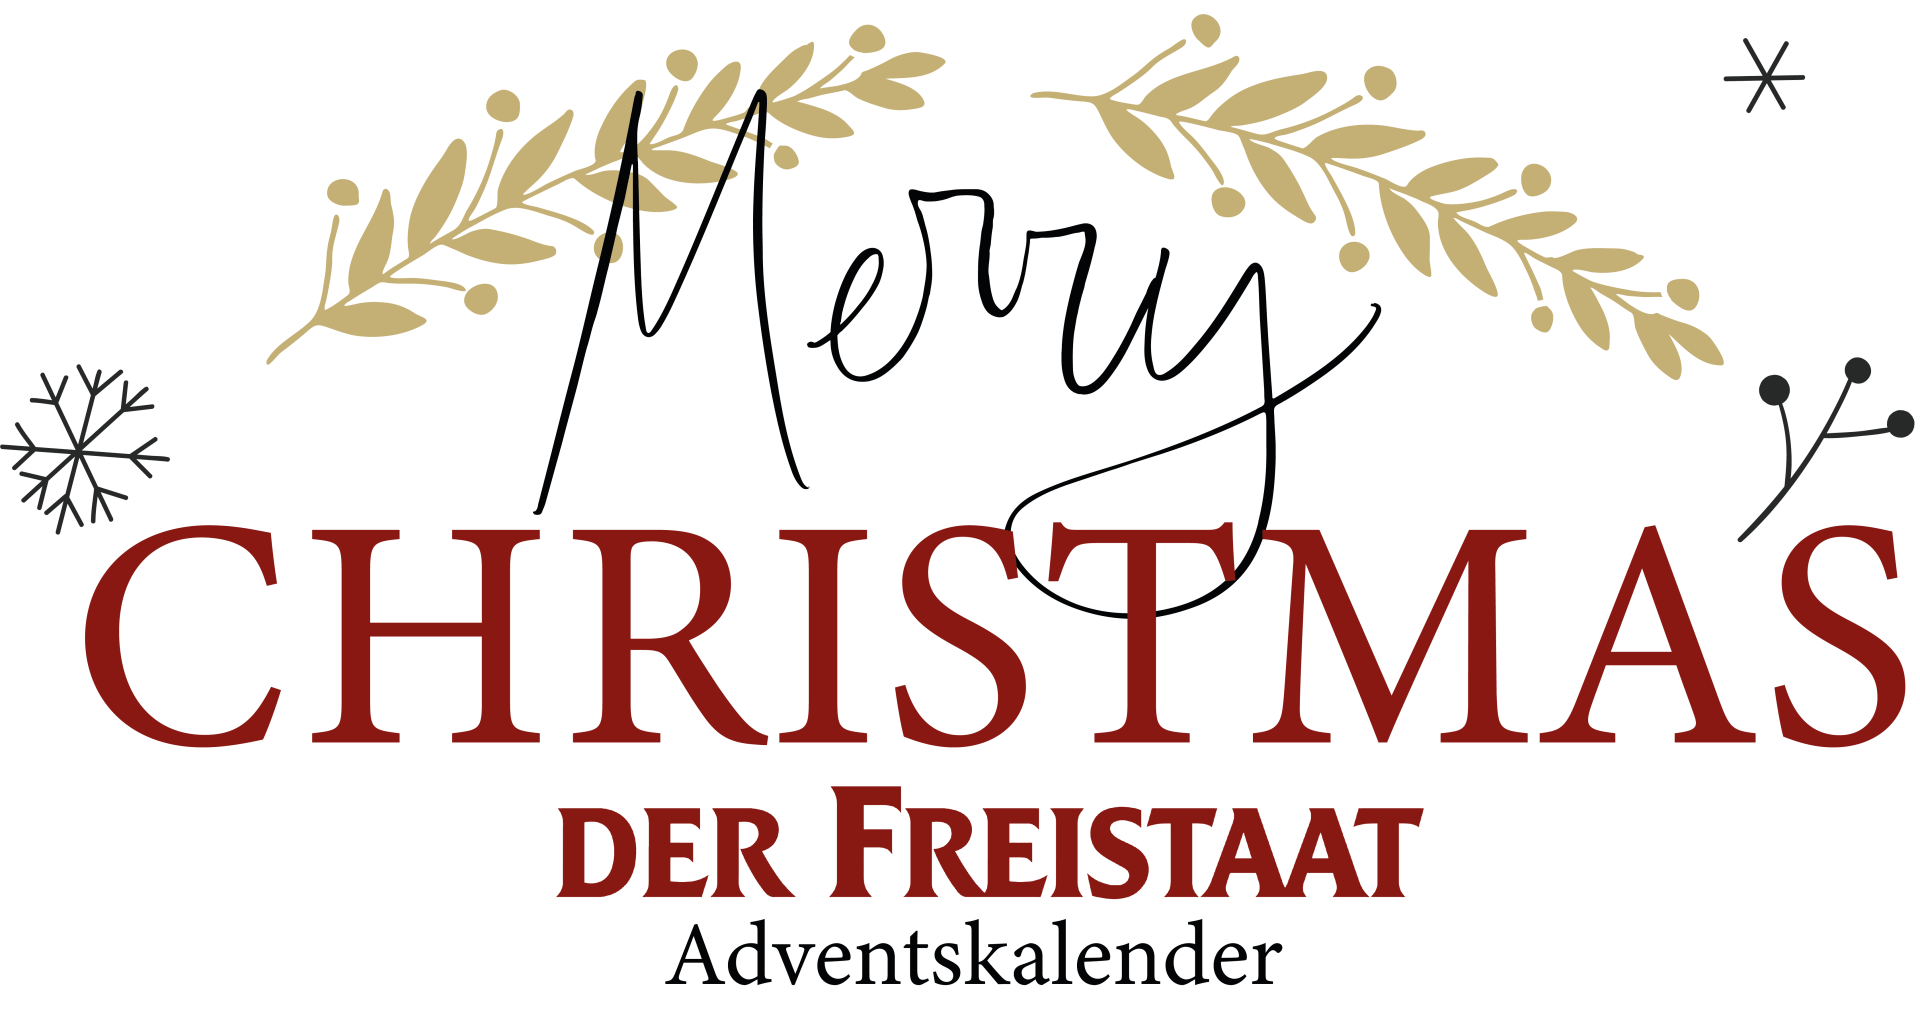 Advendskalender - der Freistaat Logo